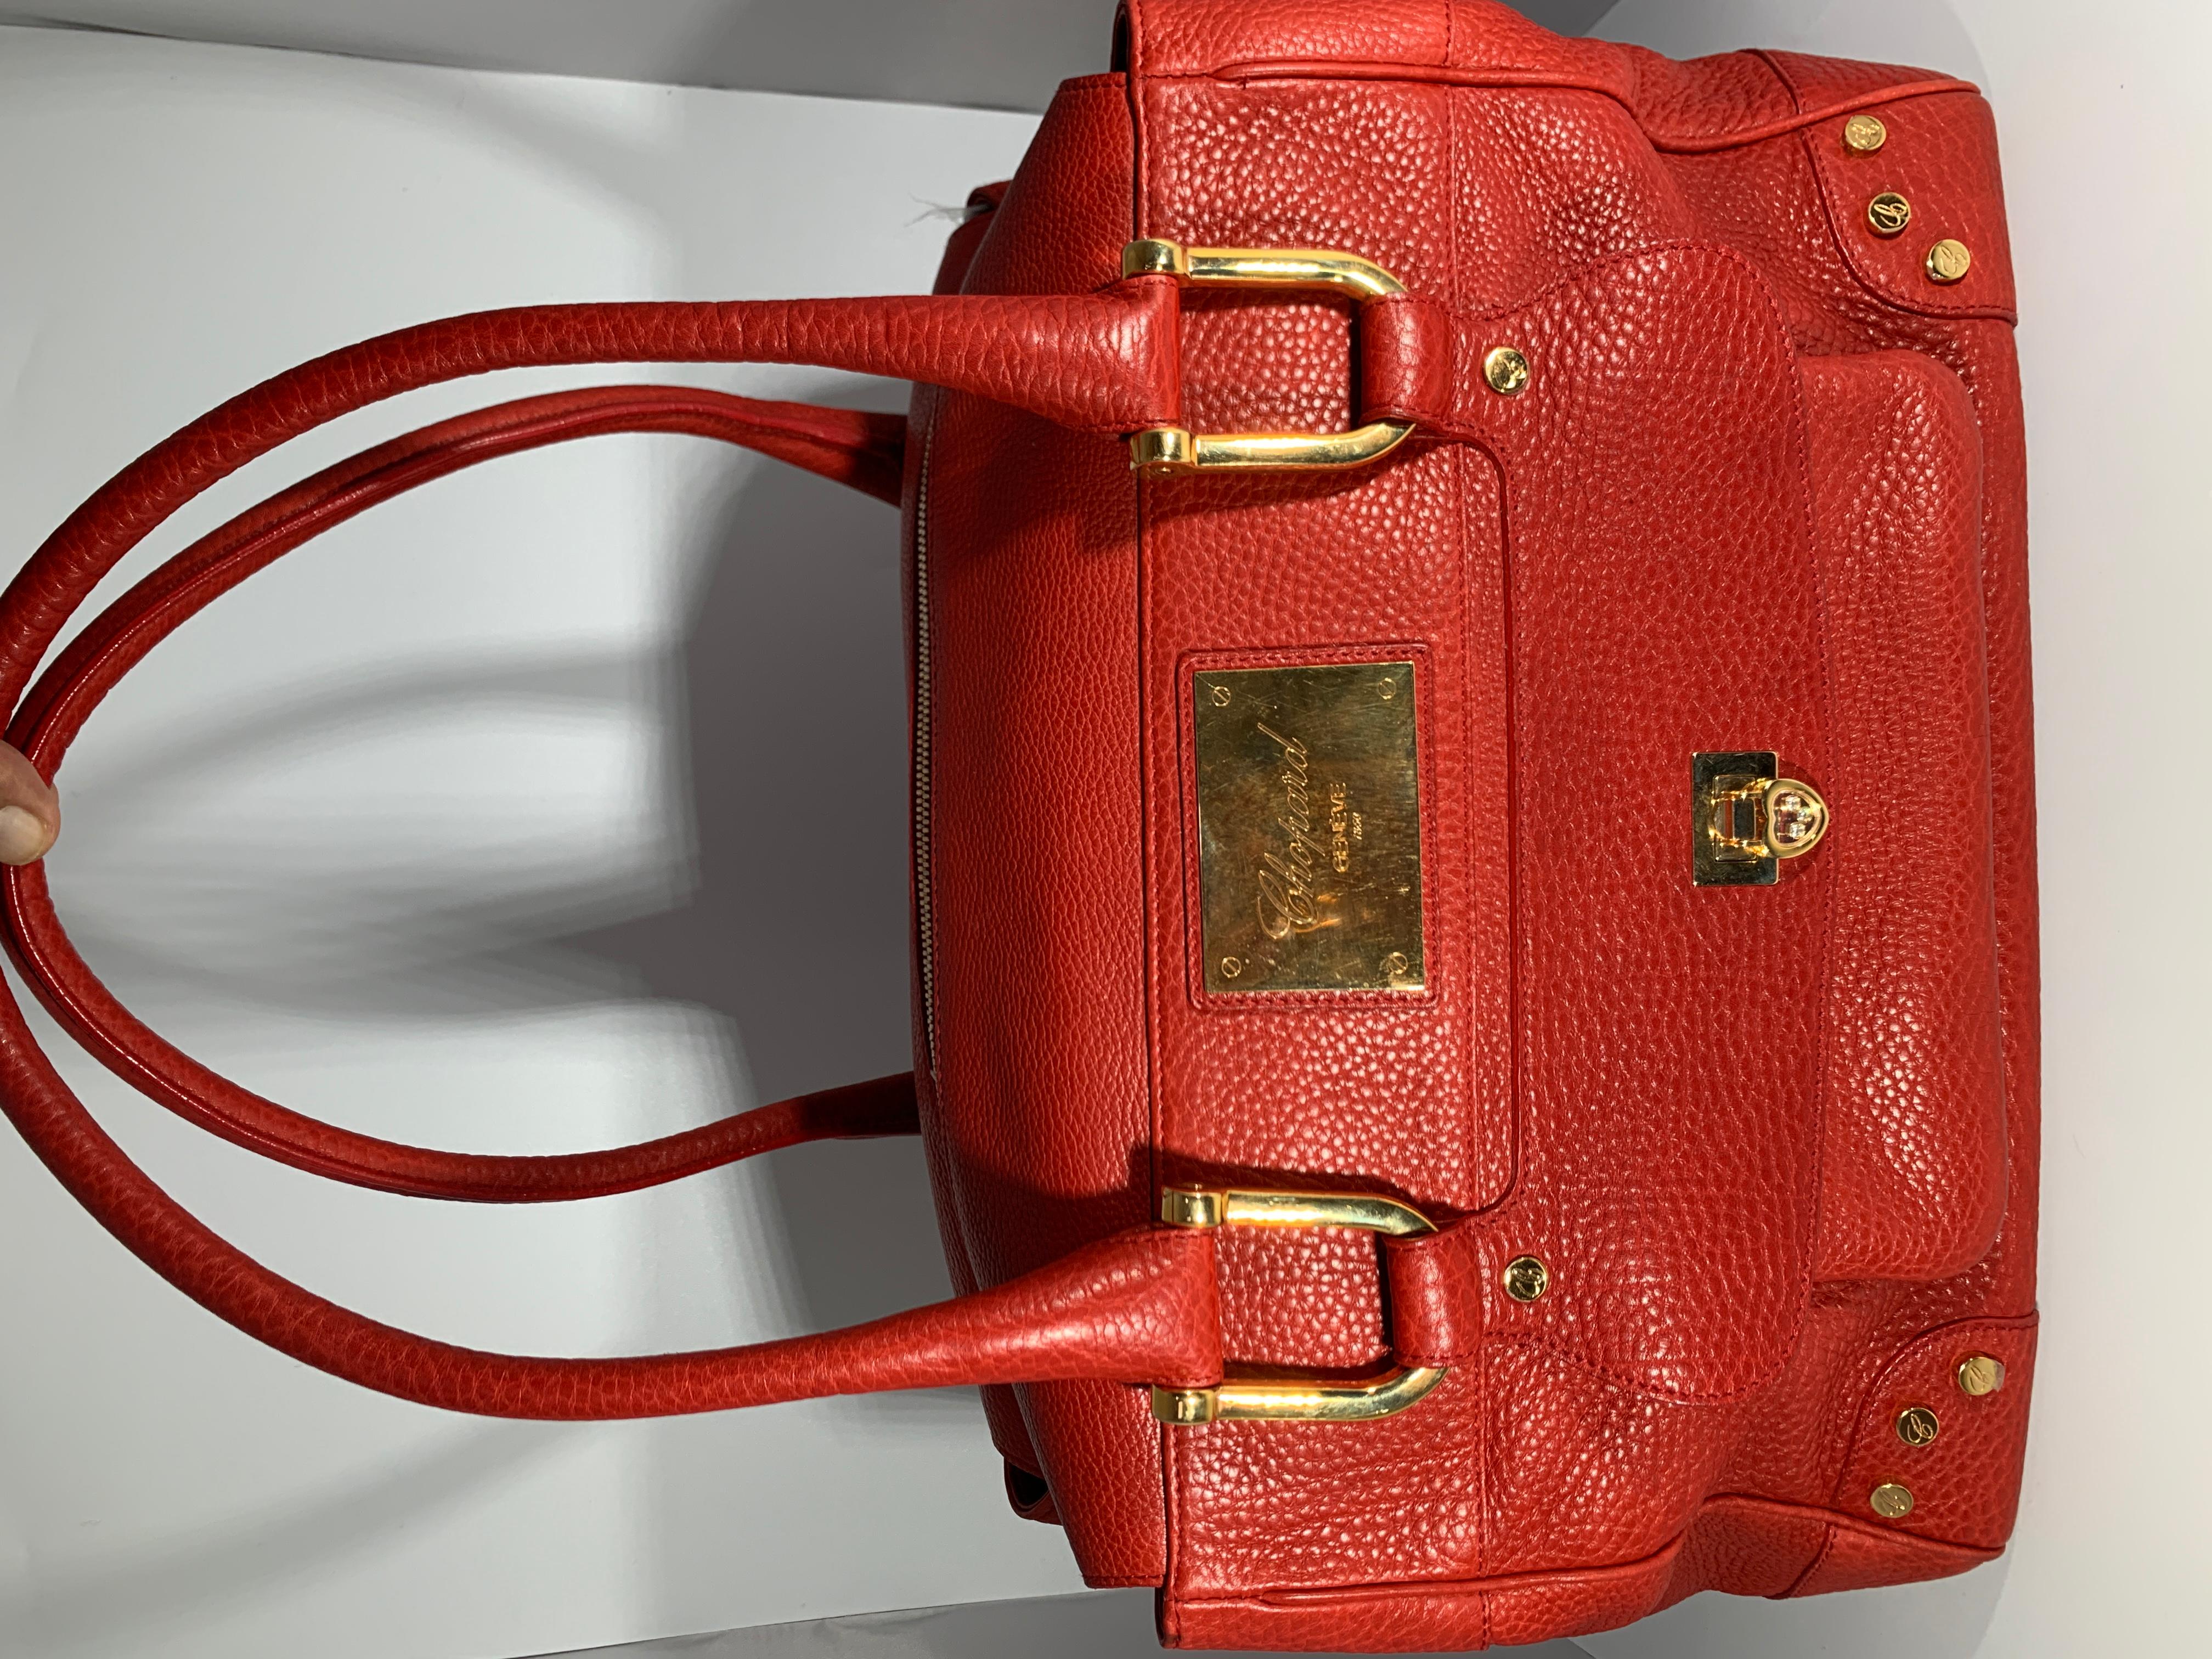 Women's Chopard Red Leather Large Handbag,  happy diamond series heart closure. 